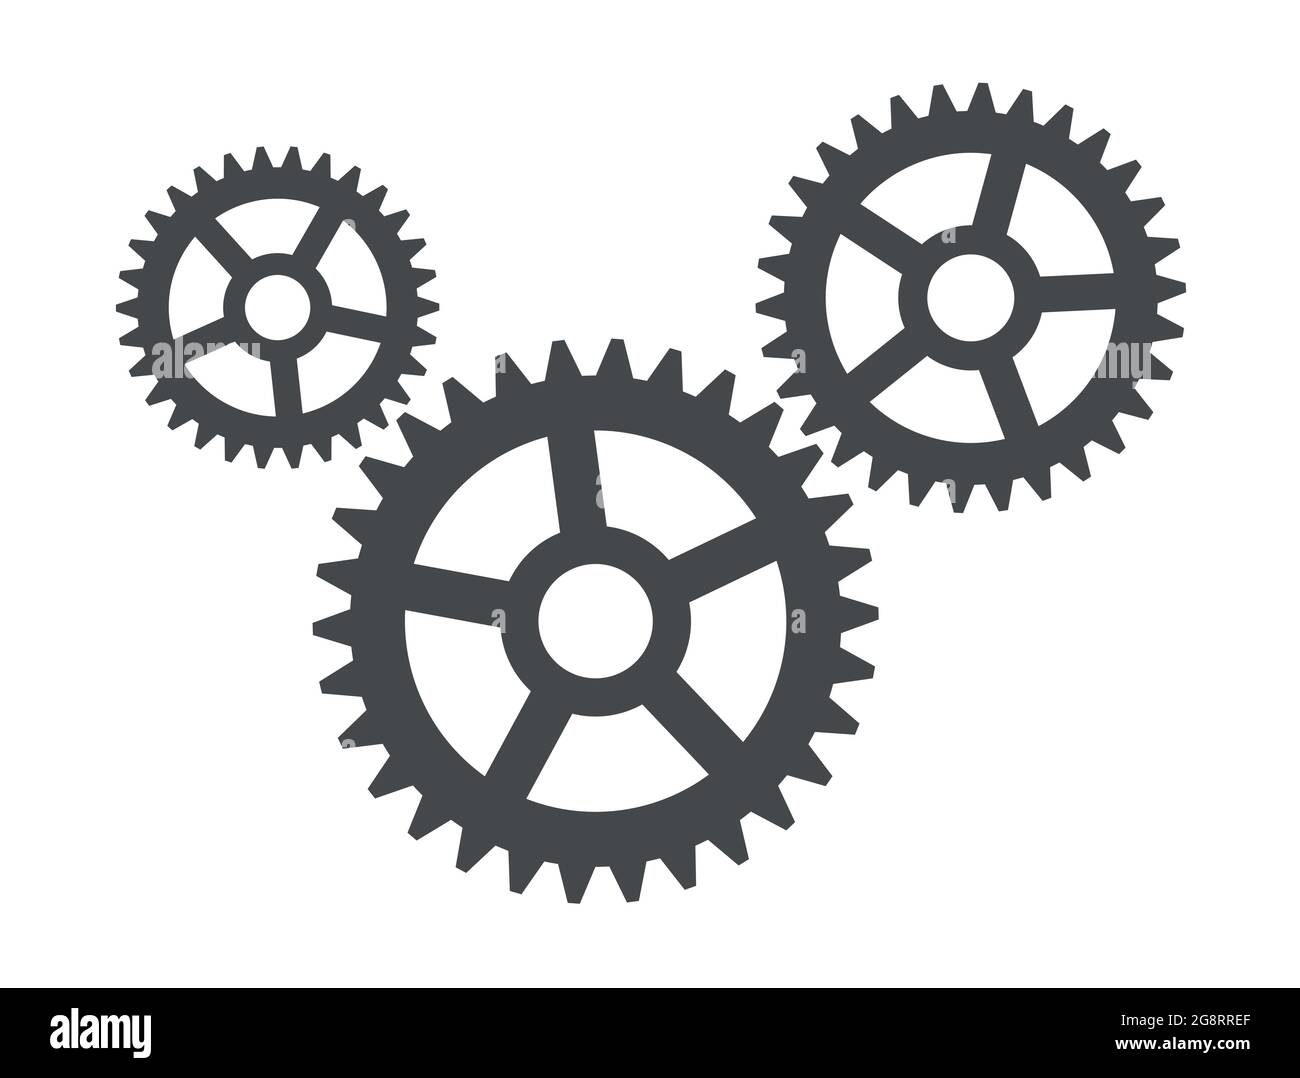 Three cogwheel gears symbol for maintenance or mechanism vector icon Stock Vector